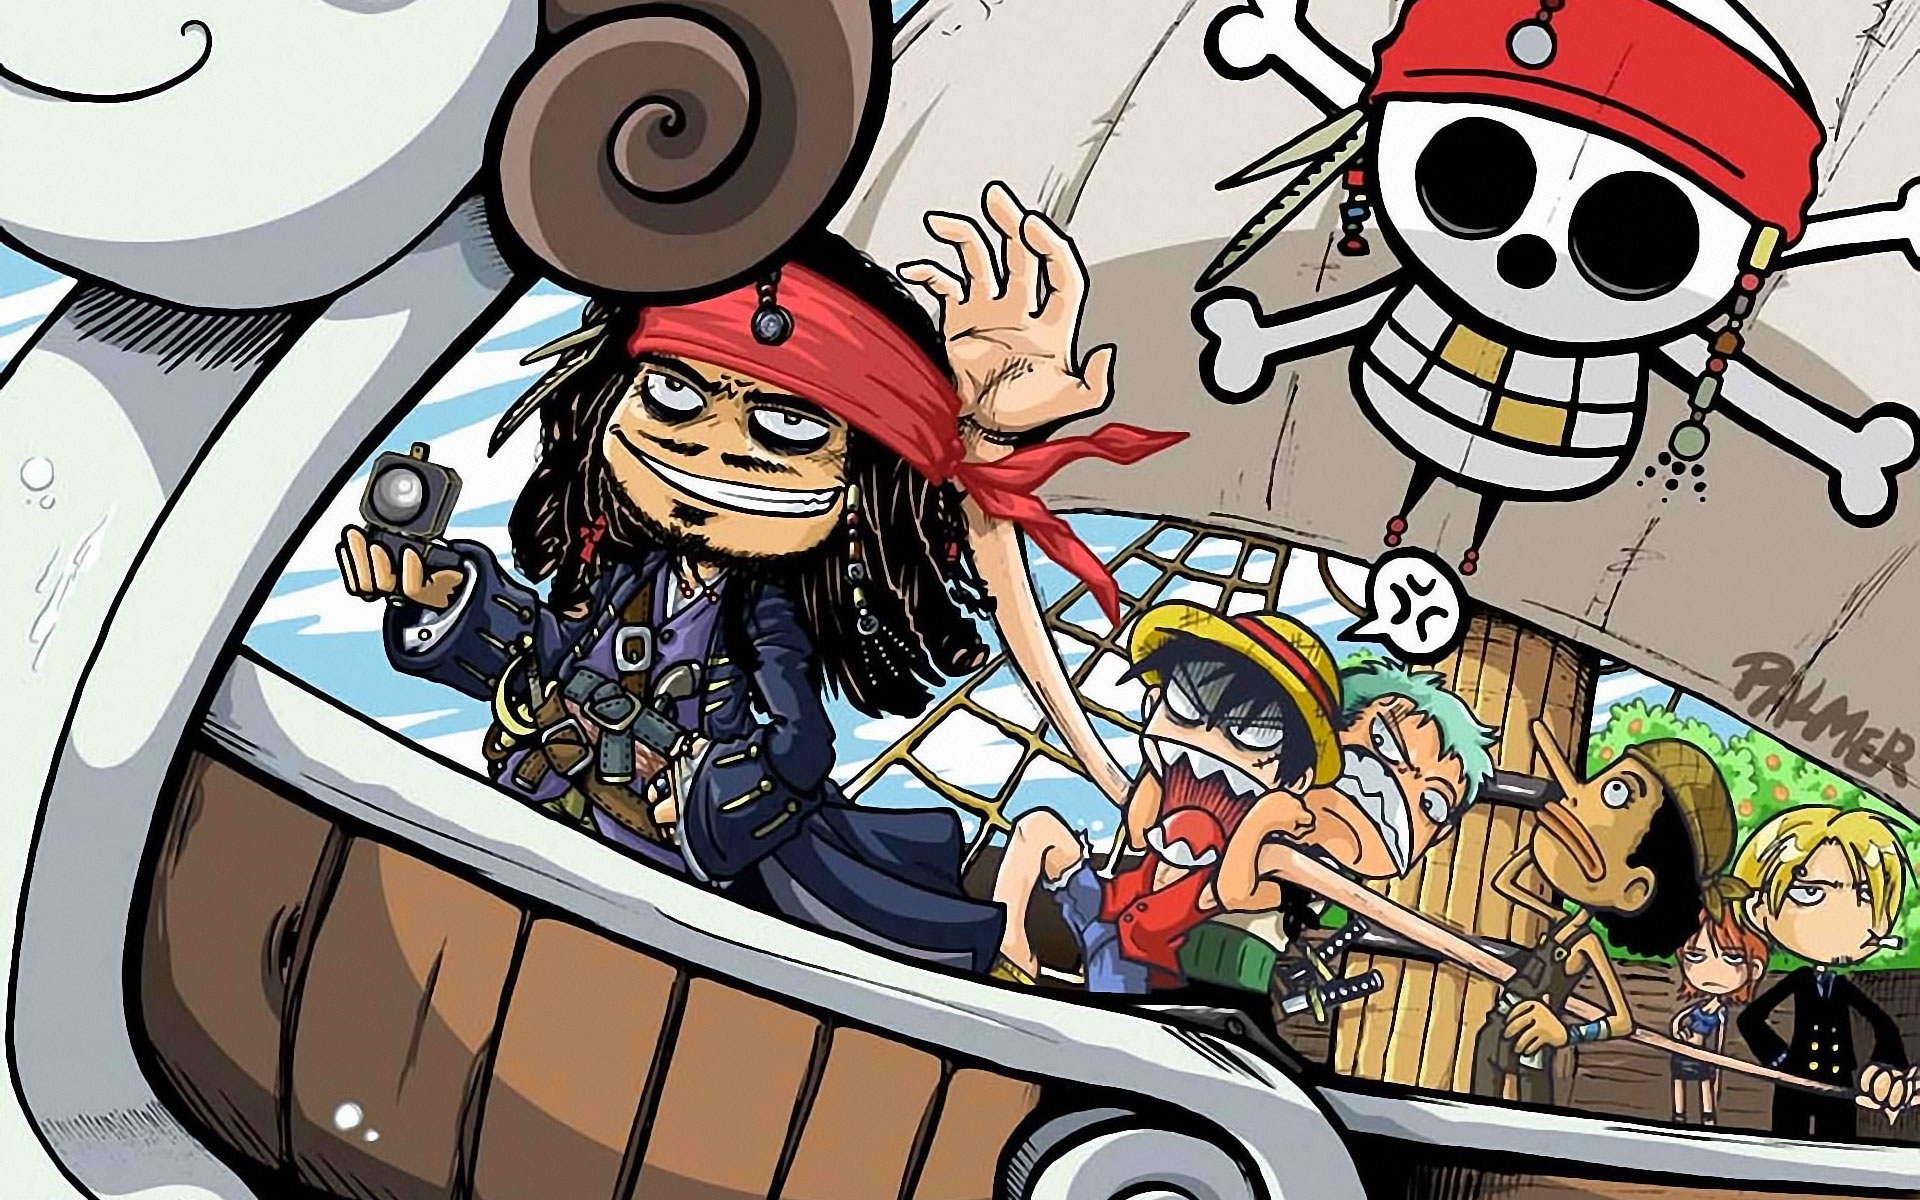 pirates 2005 free download movie